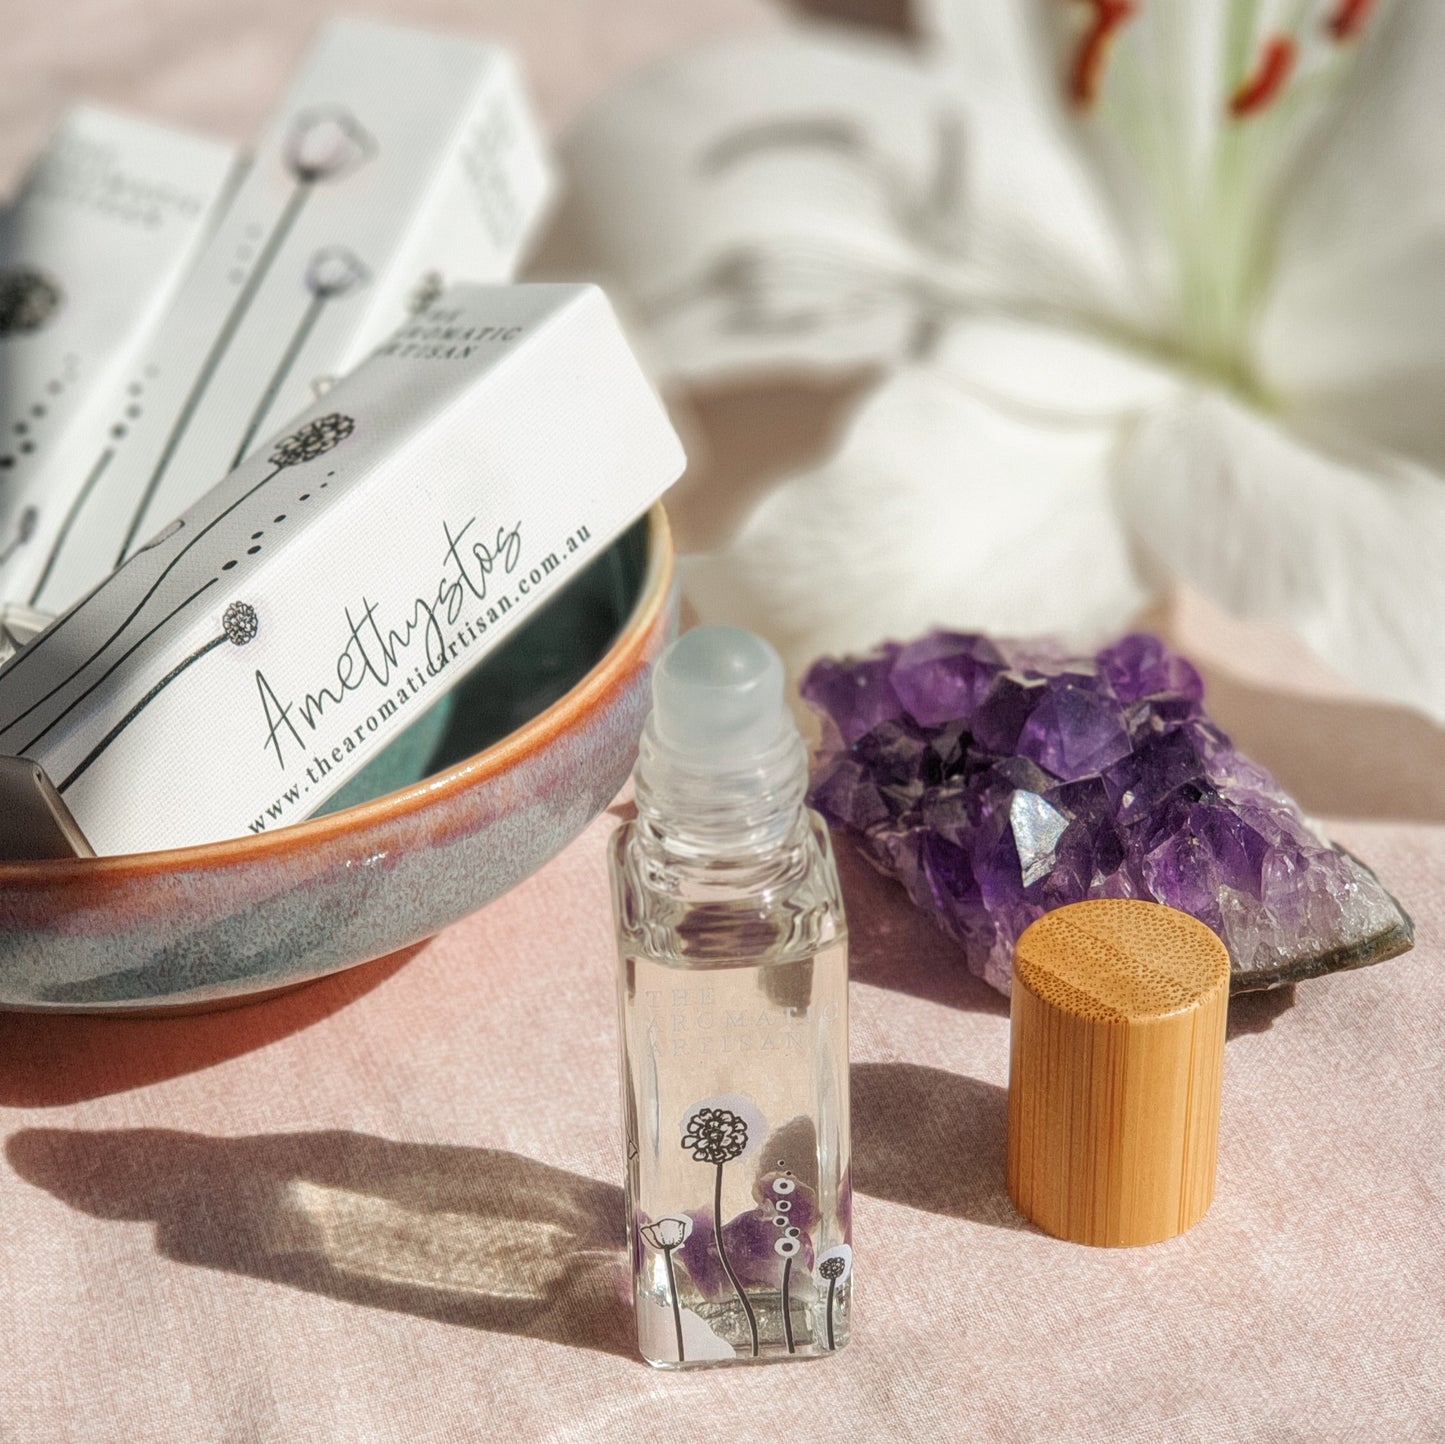 Amethystos | Fragrant Perfume Oil